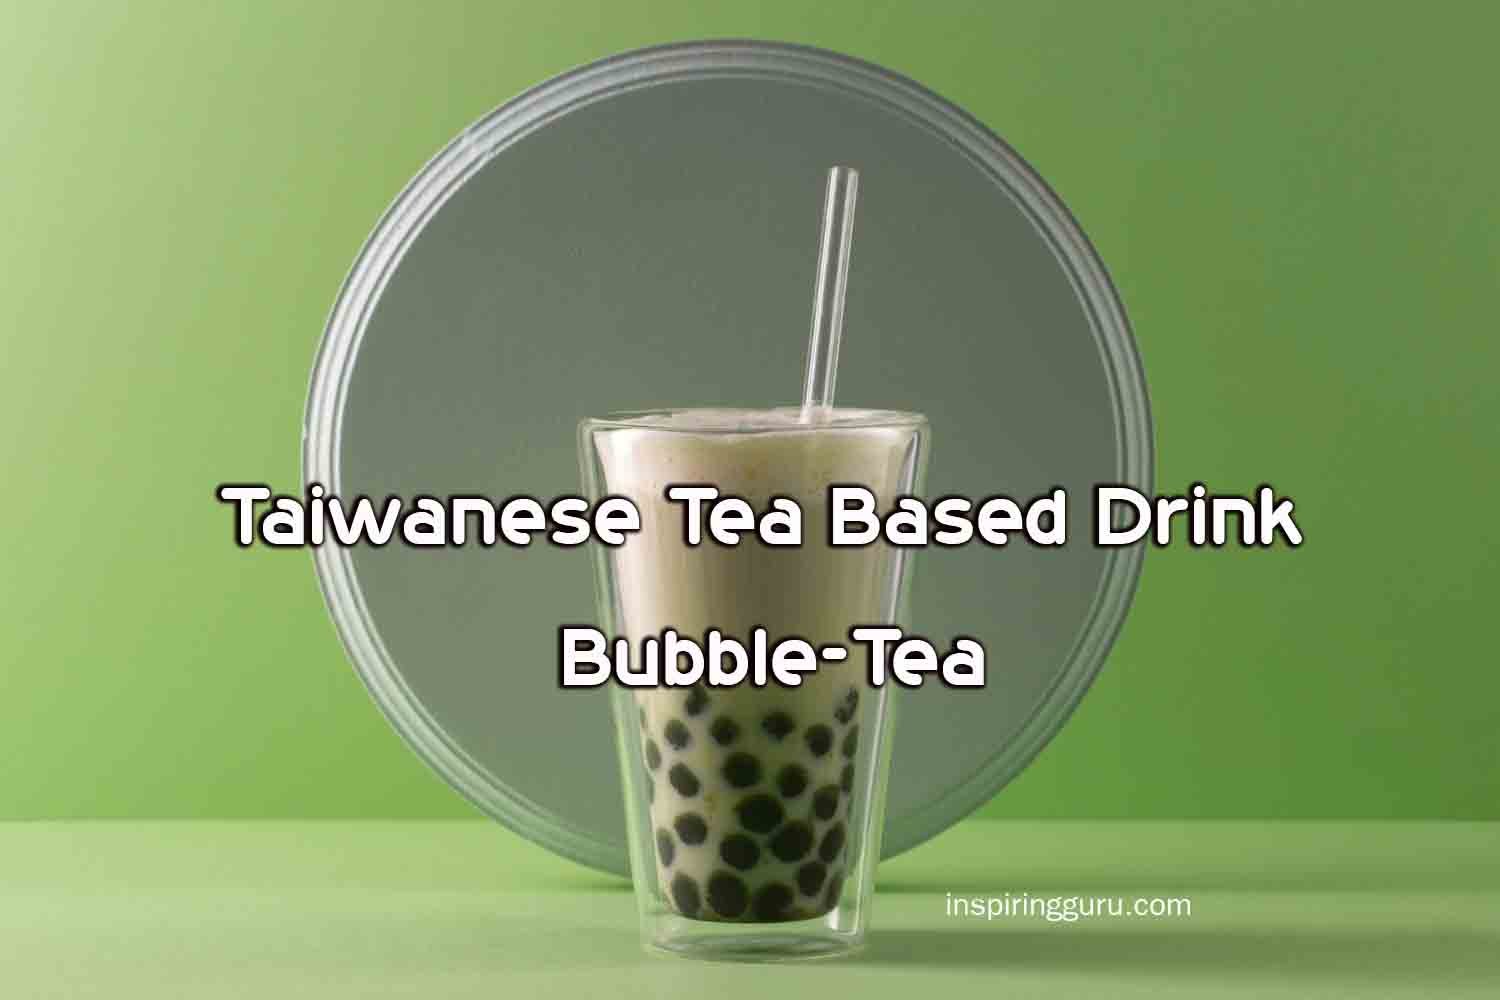 Taiwanese tea-based drink